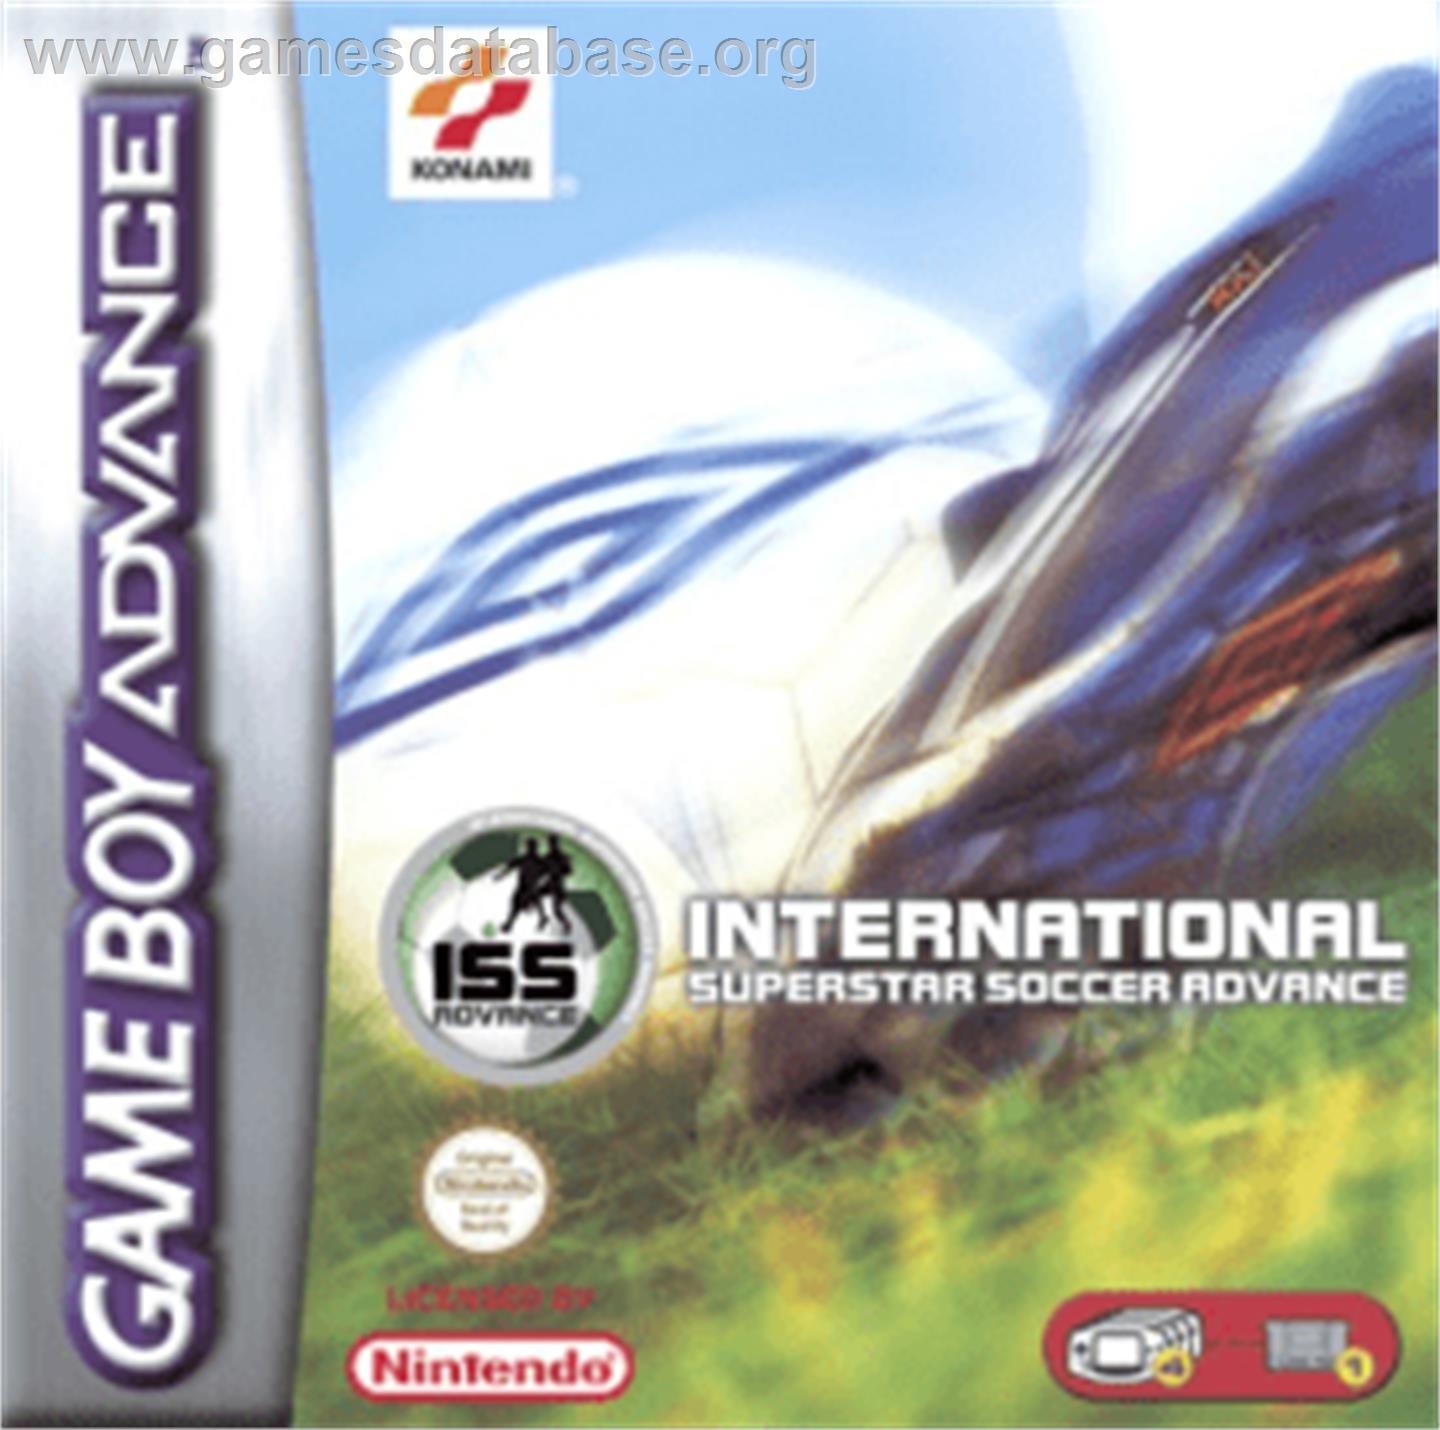 International Superstar Soccer Advance - Nintendo Game Boy Advance - Artwork - Box